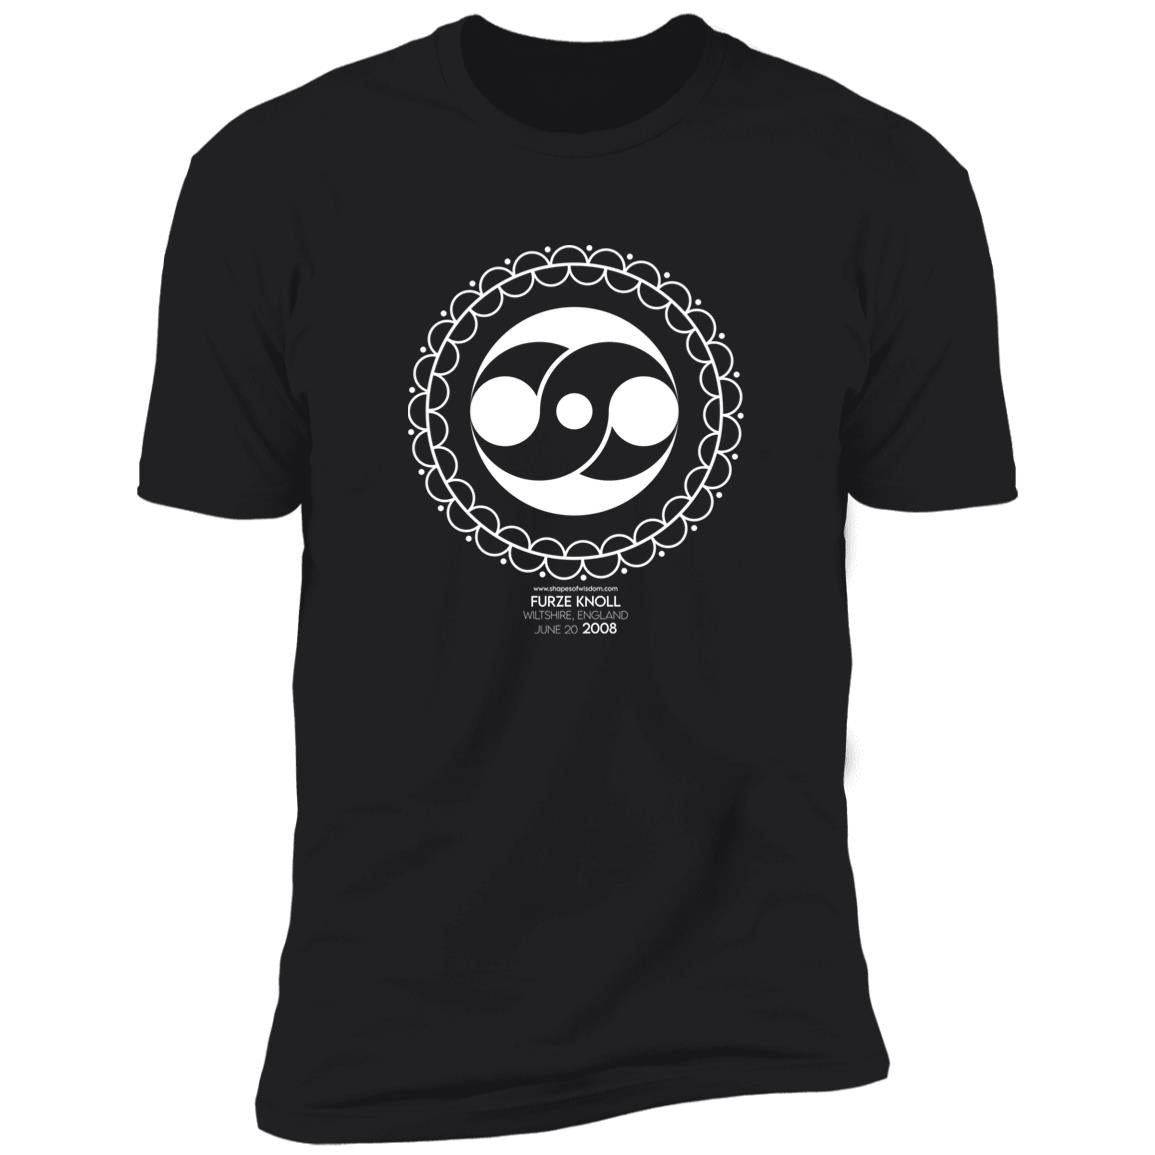 Crop Circle Premium T-Shirt - Furze Knoll